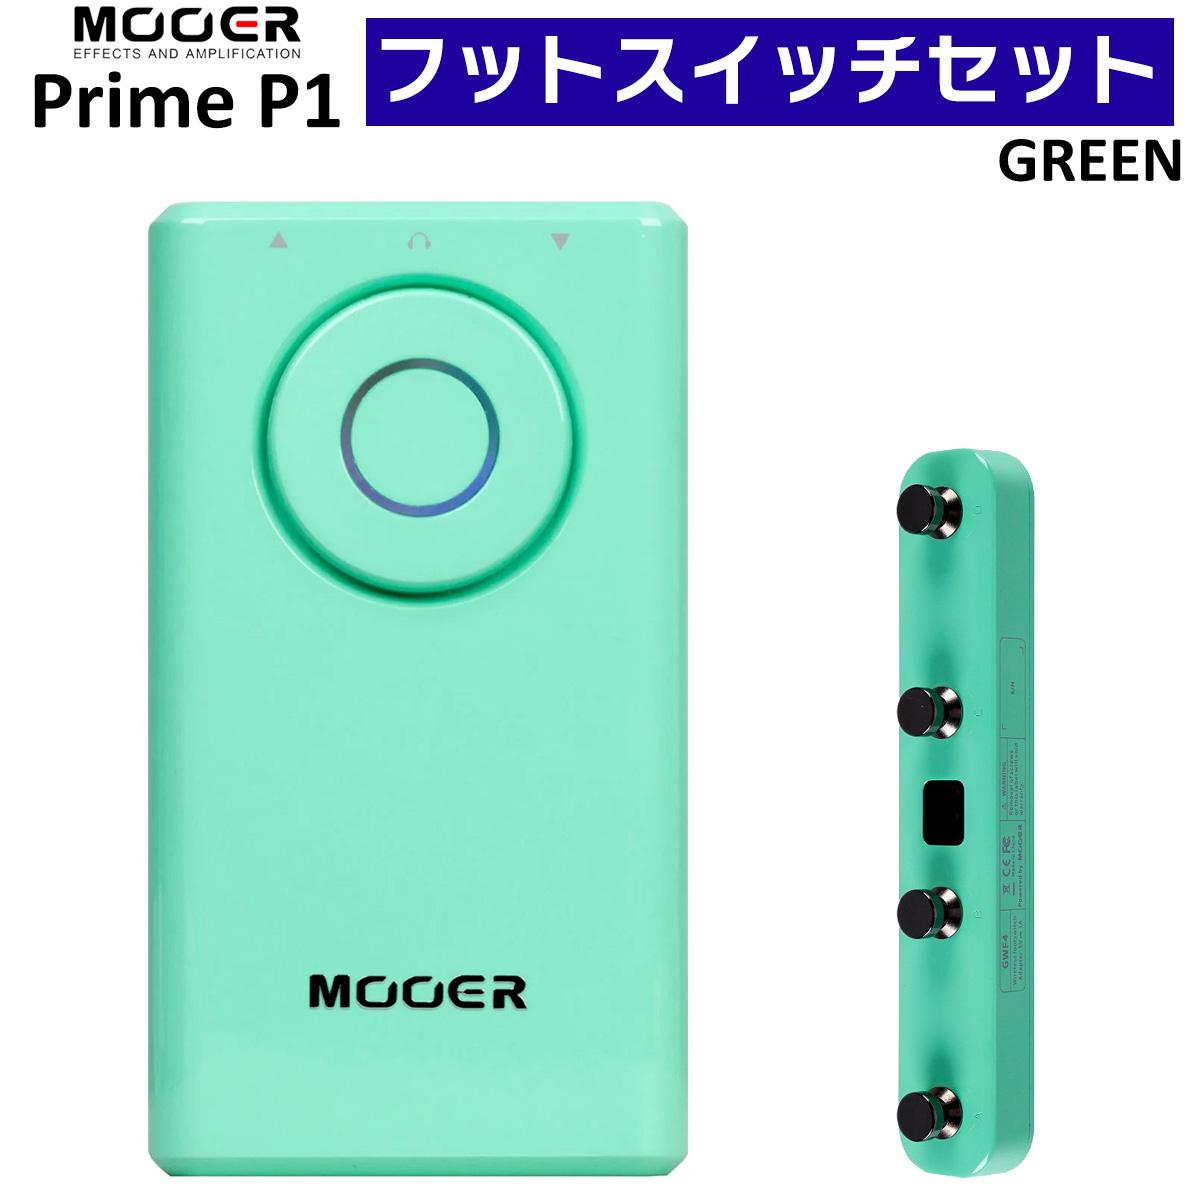 MOOER Prime P1 GREEN + GWF4 フットスイッチセット 超小型マルチ